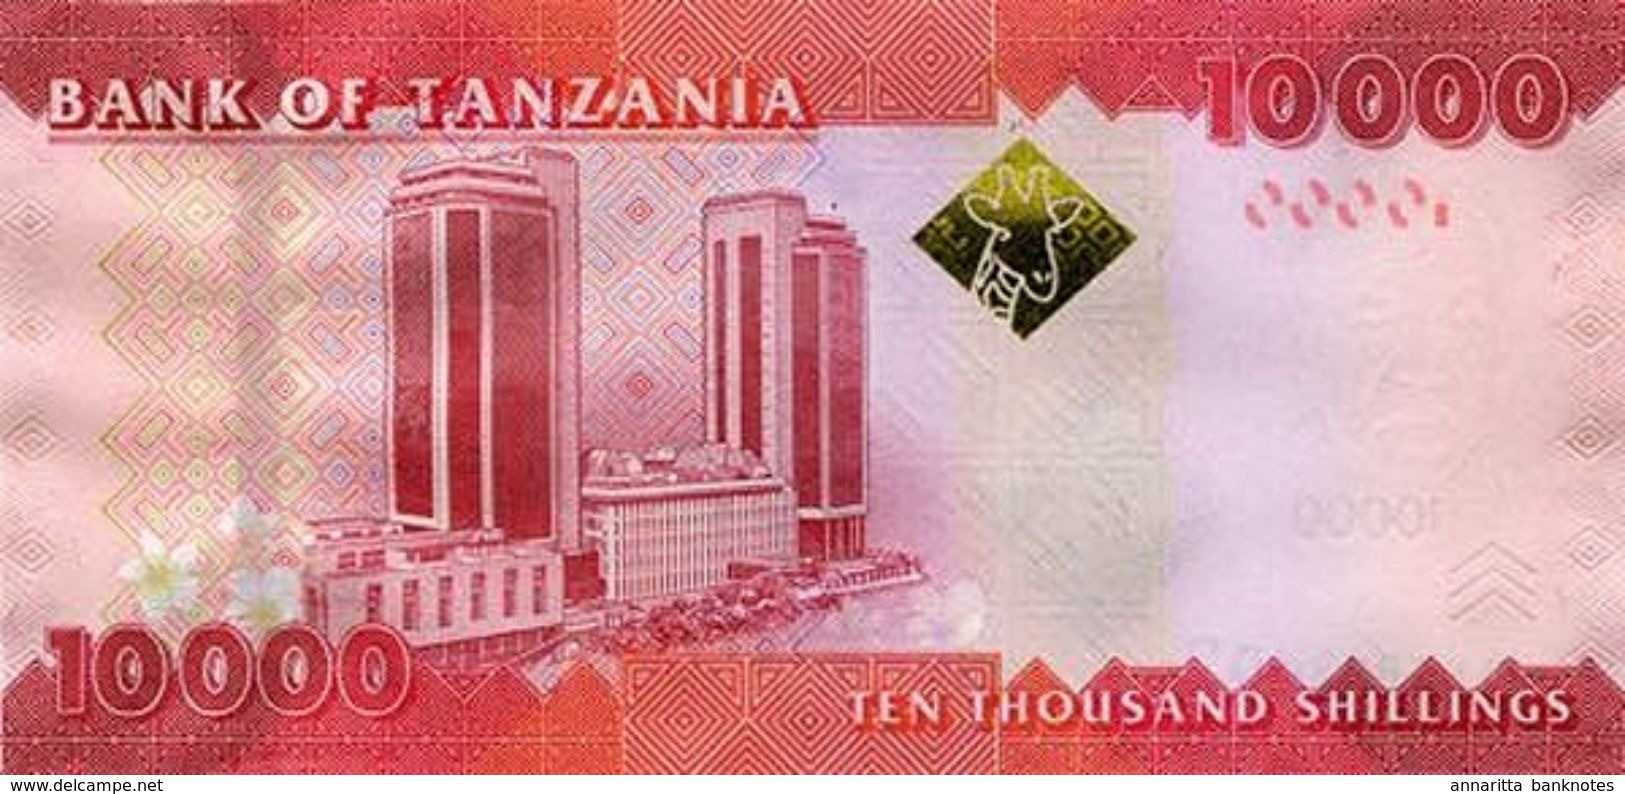 Tanzania (BOT) 10000 Shillings ND (2015) UNC Cat No. P-44b / TZ143b - Tansania